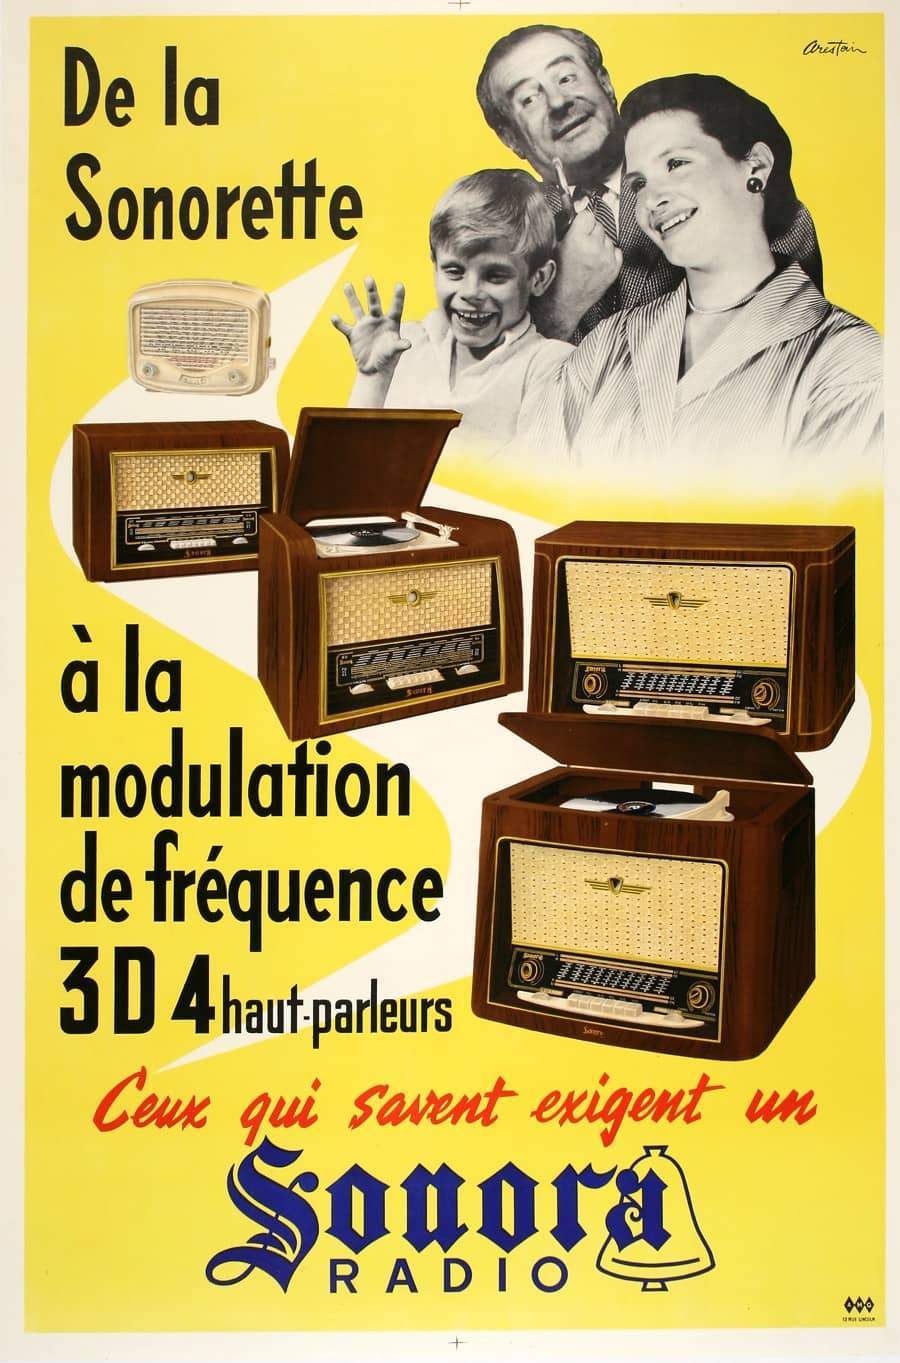 Sonora Radio French Original Poster circa 1955 by Arestein.